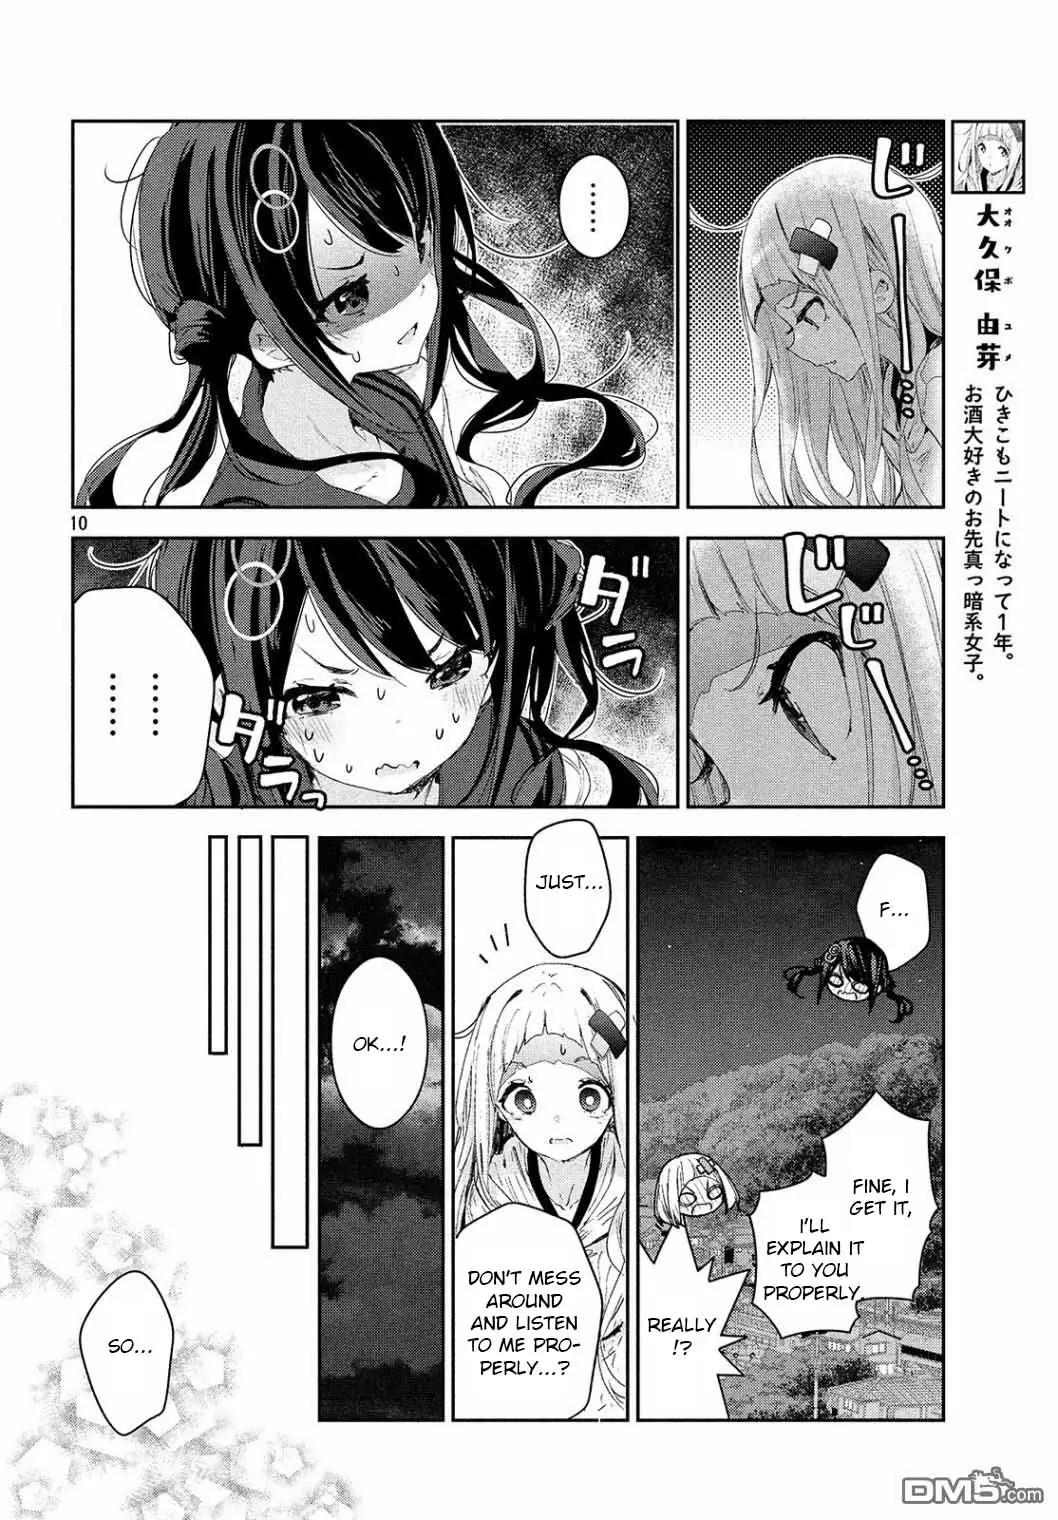 Chiisai Nozomi To Ooki Na Yume - 14 page 11